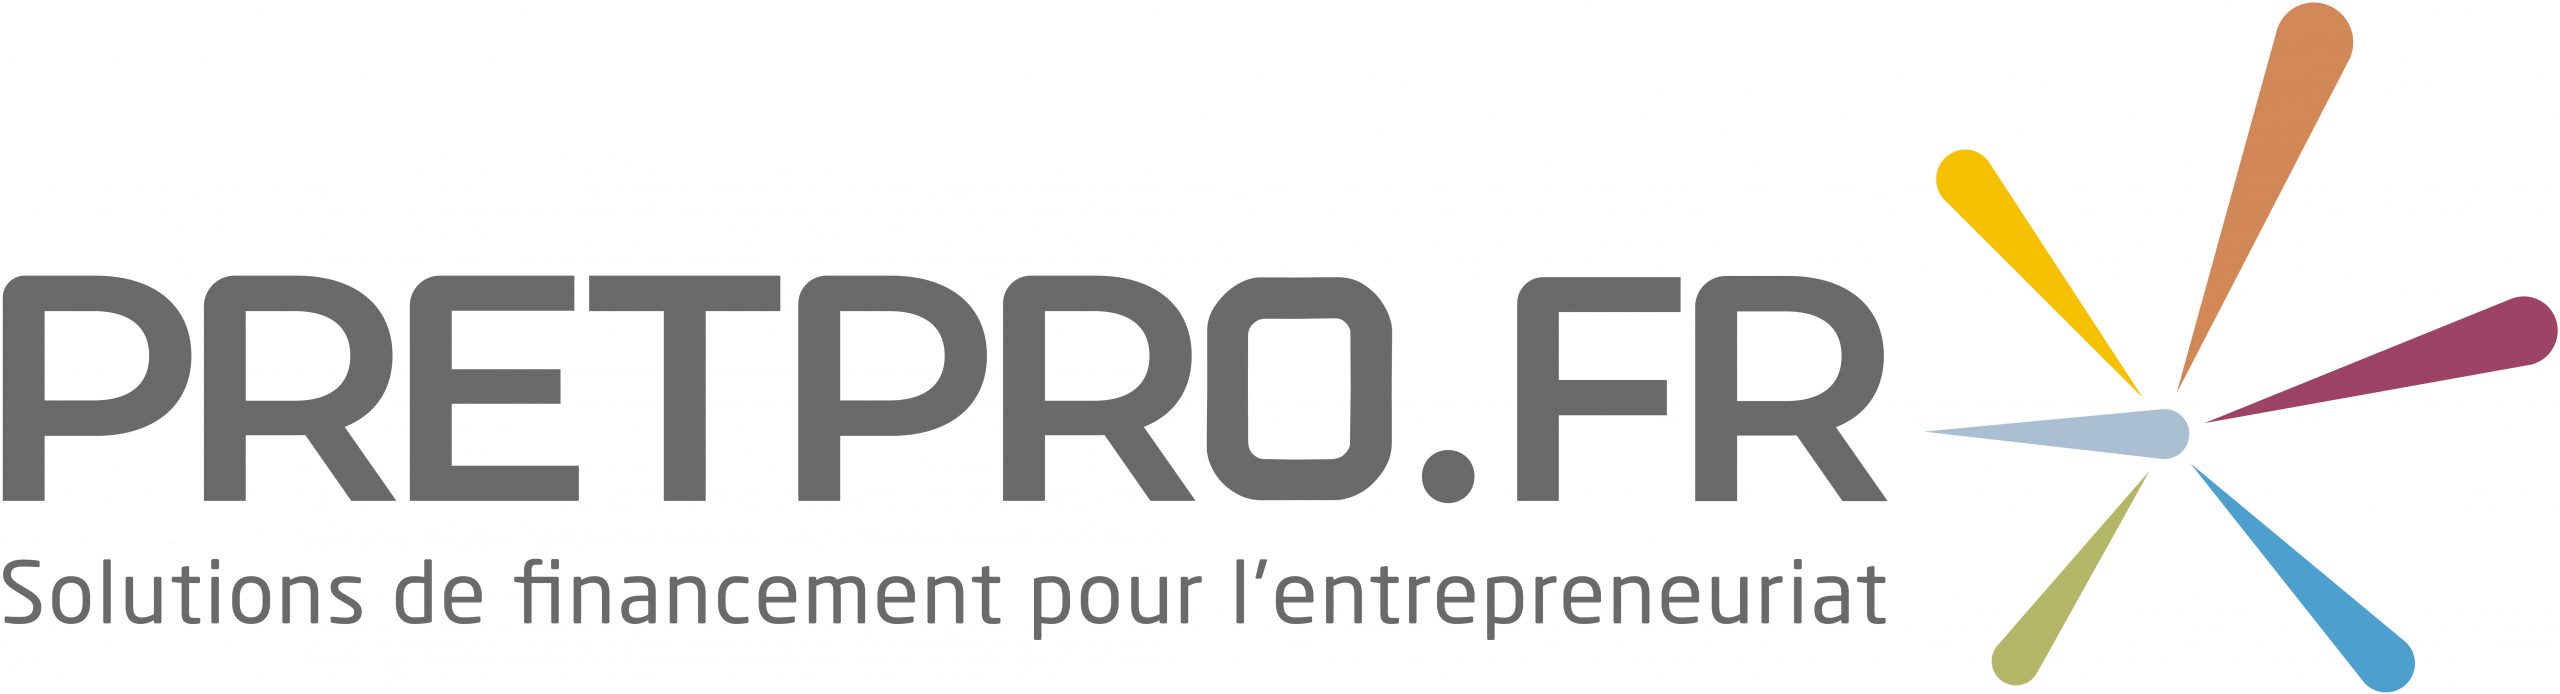 Pretpro.fr – Auvergne-Rhône-Alpes